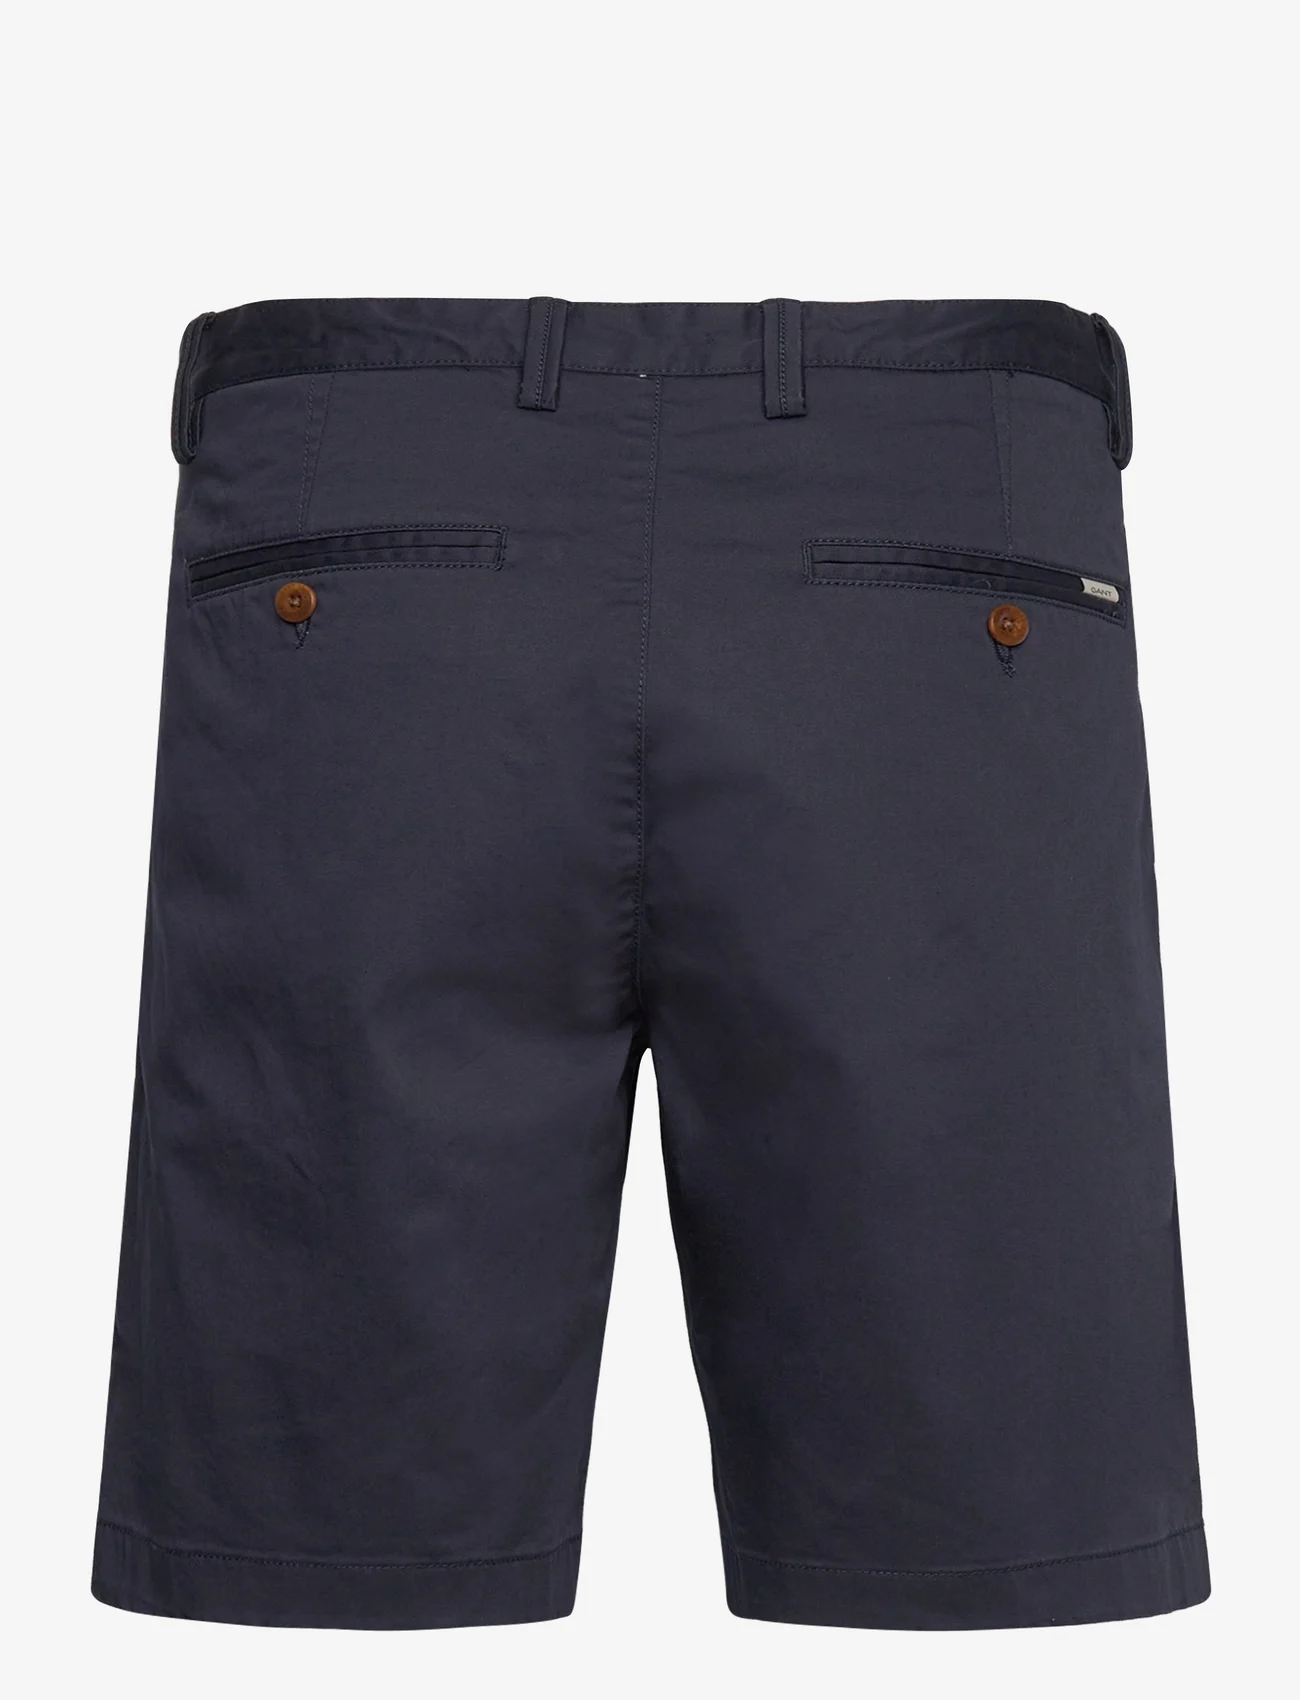 GANT - SLIM TWILL SHORTS - chino shorts - marine - 1